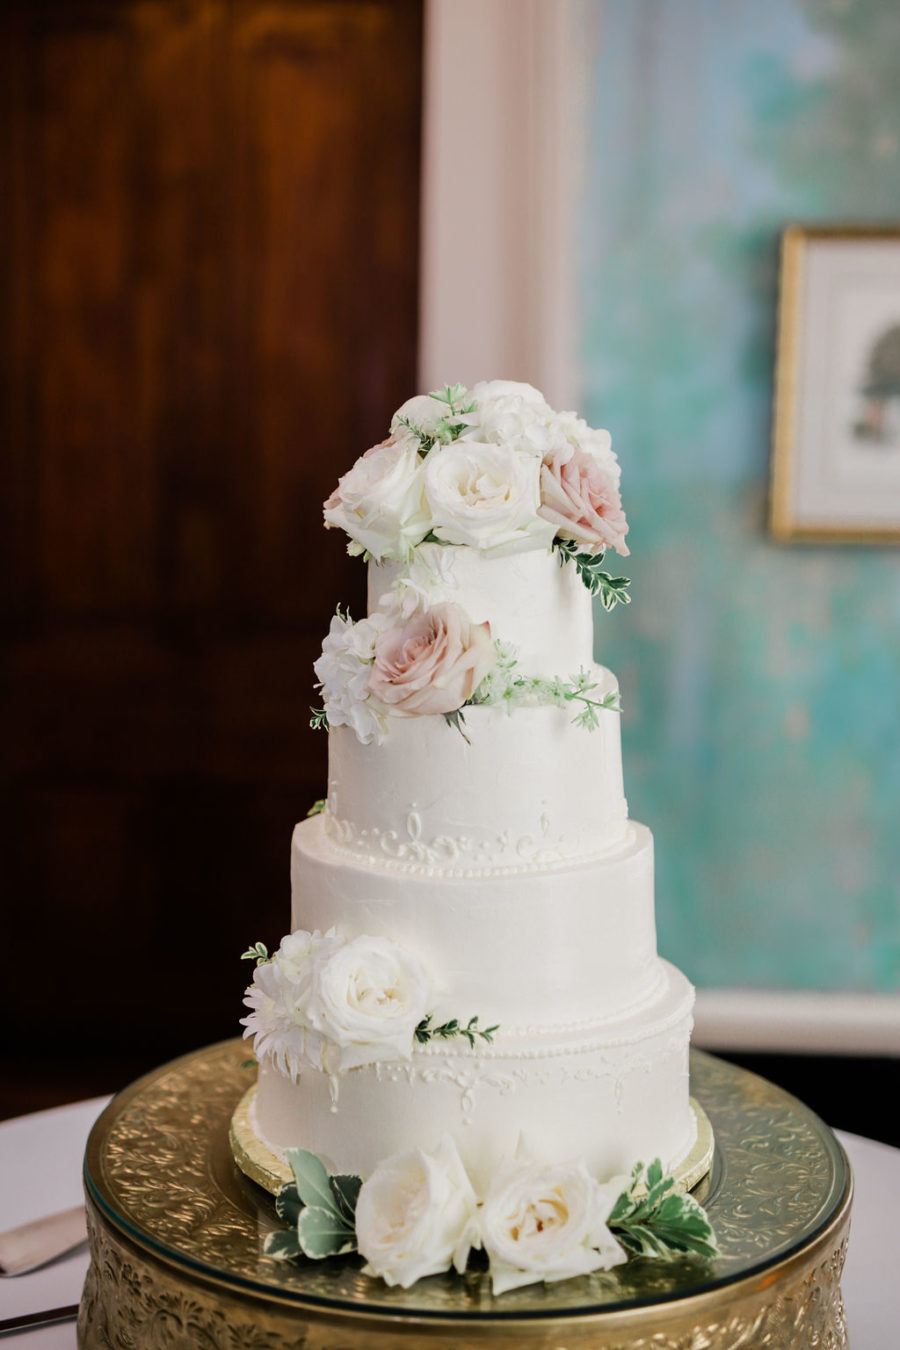 Pink and white wedding cake with flowers: Wedding portrait by Nashville wedding photographer Maria Gloer Photography